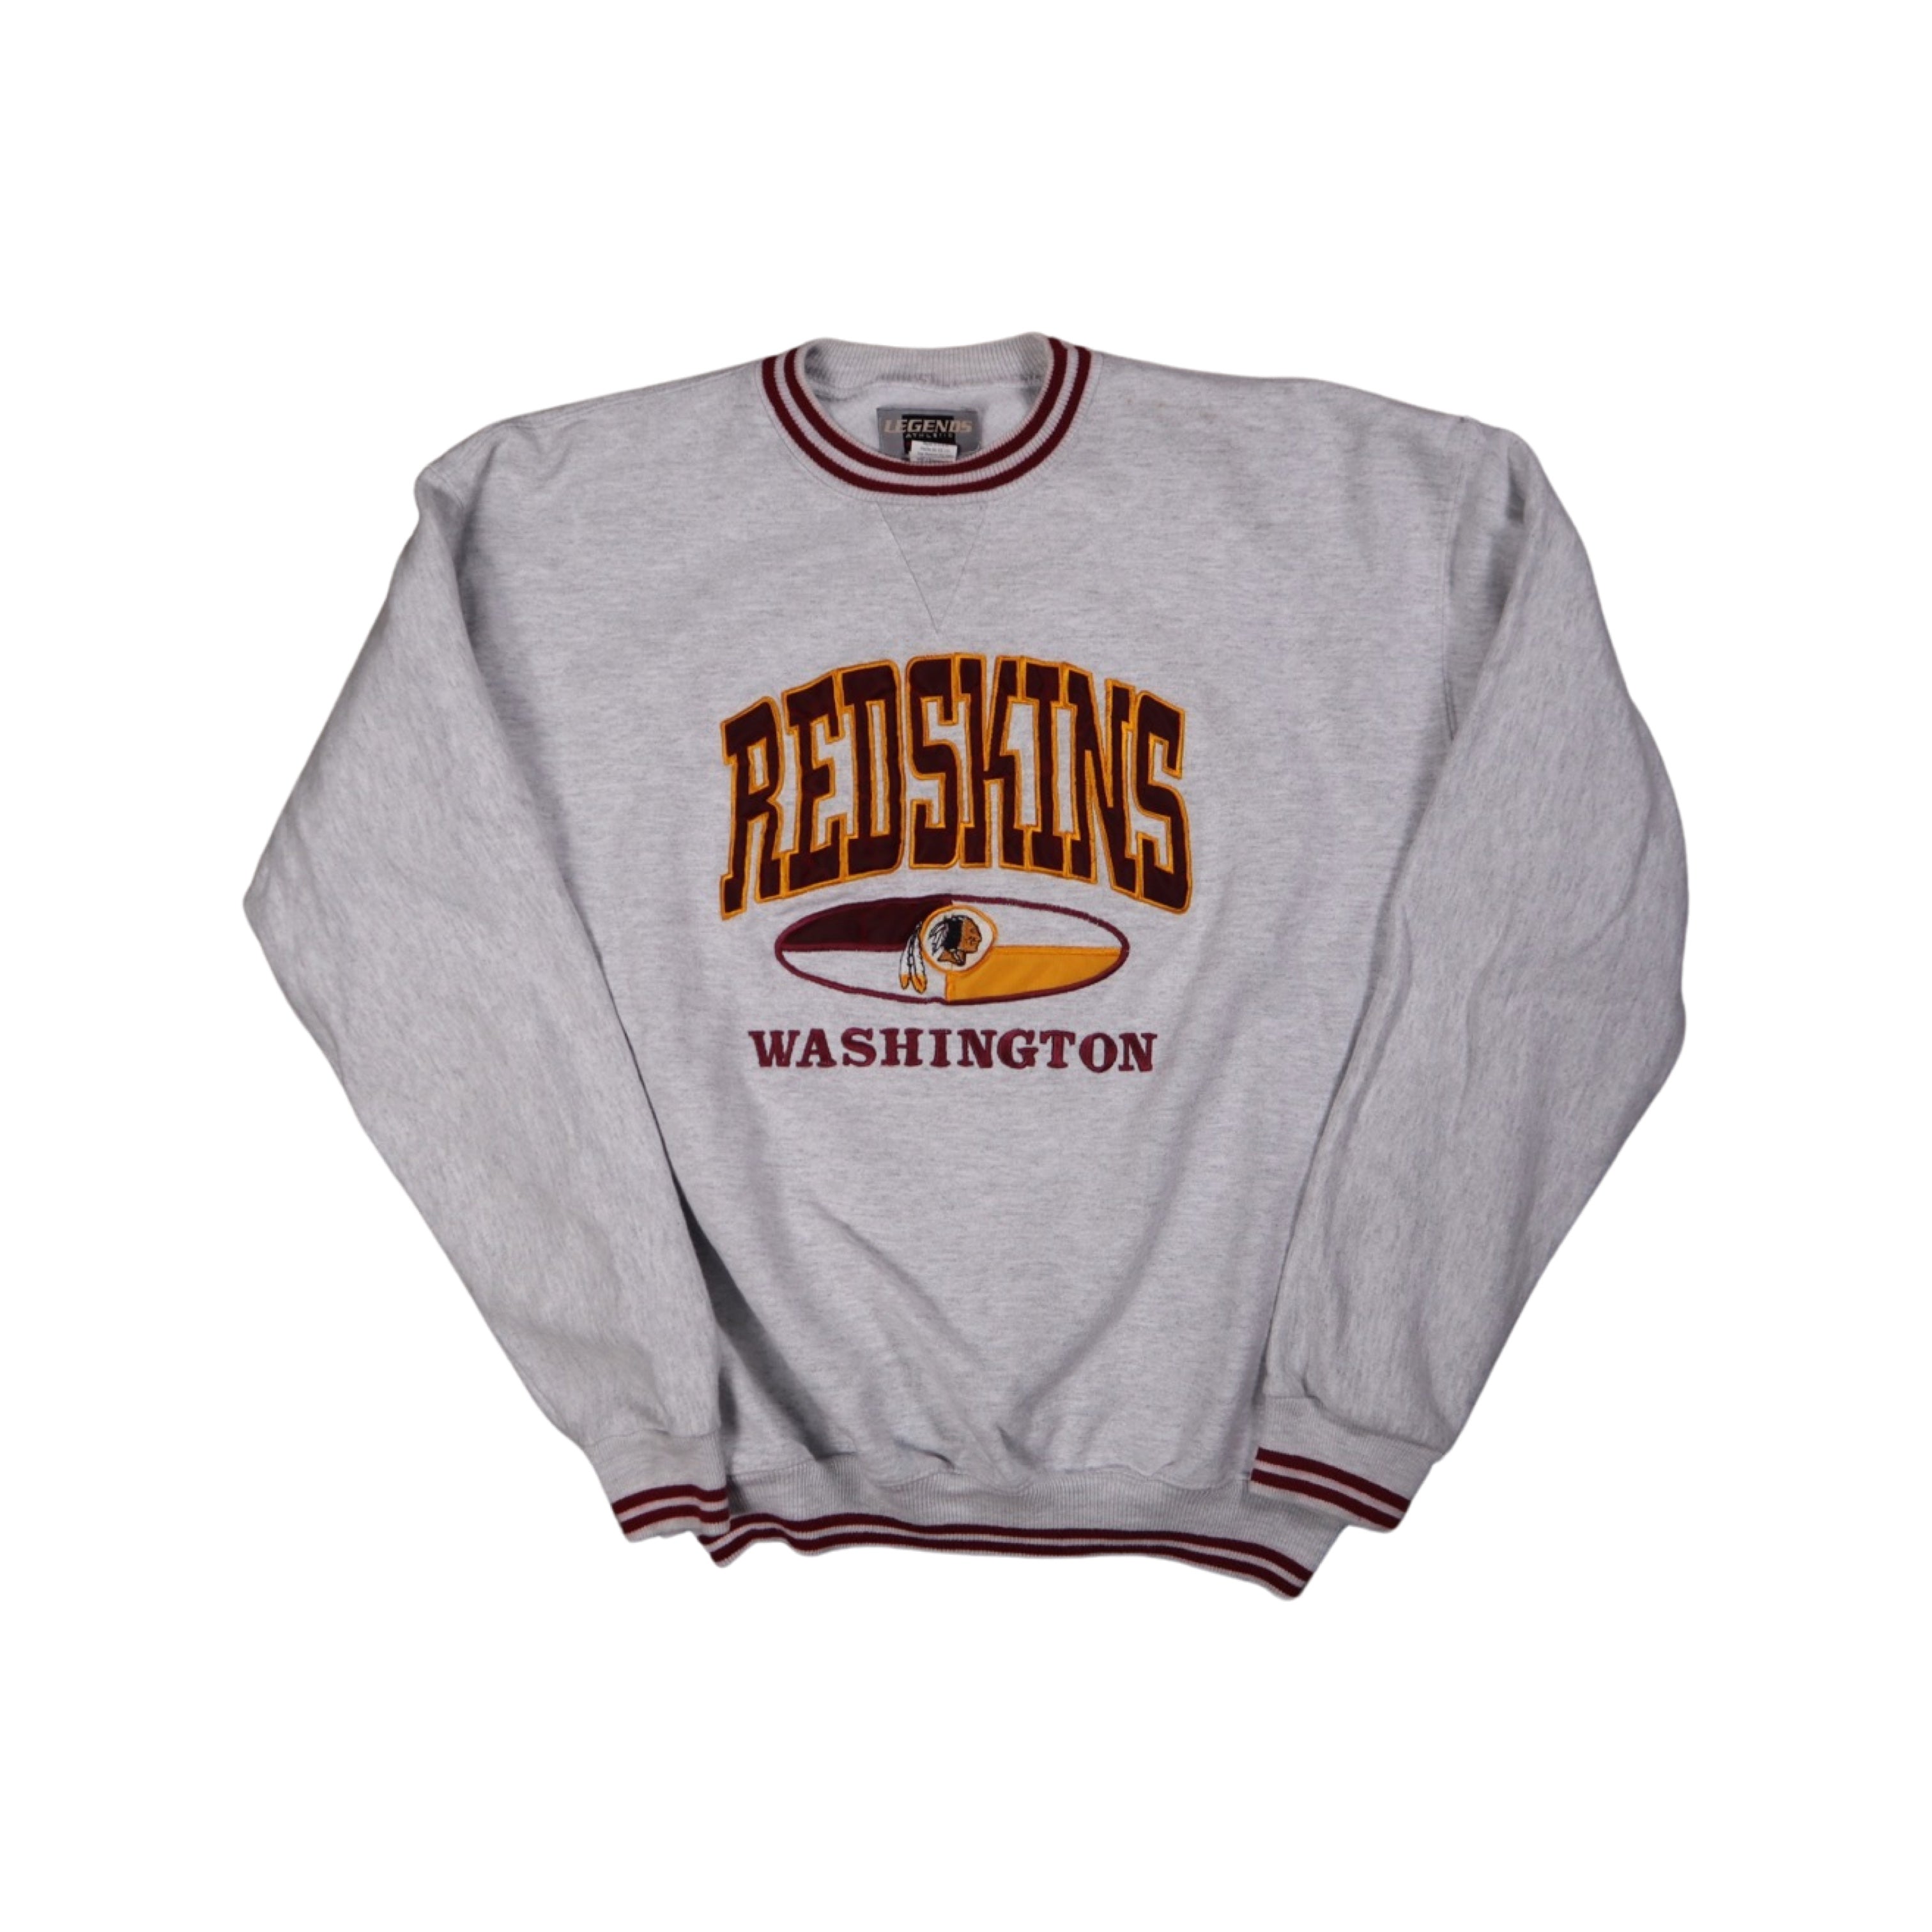 Washington Redskins 90s Cuffed Sweater (Small)